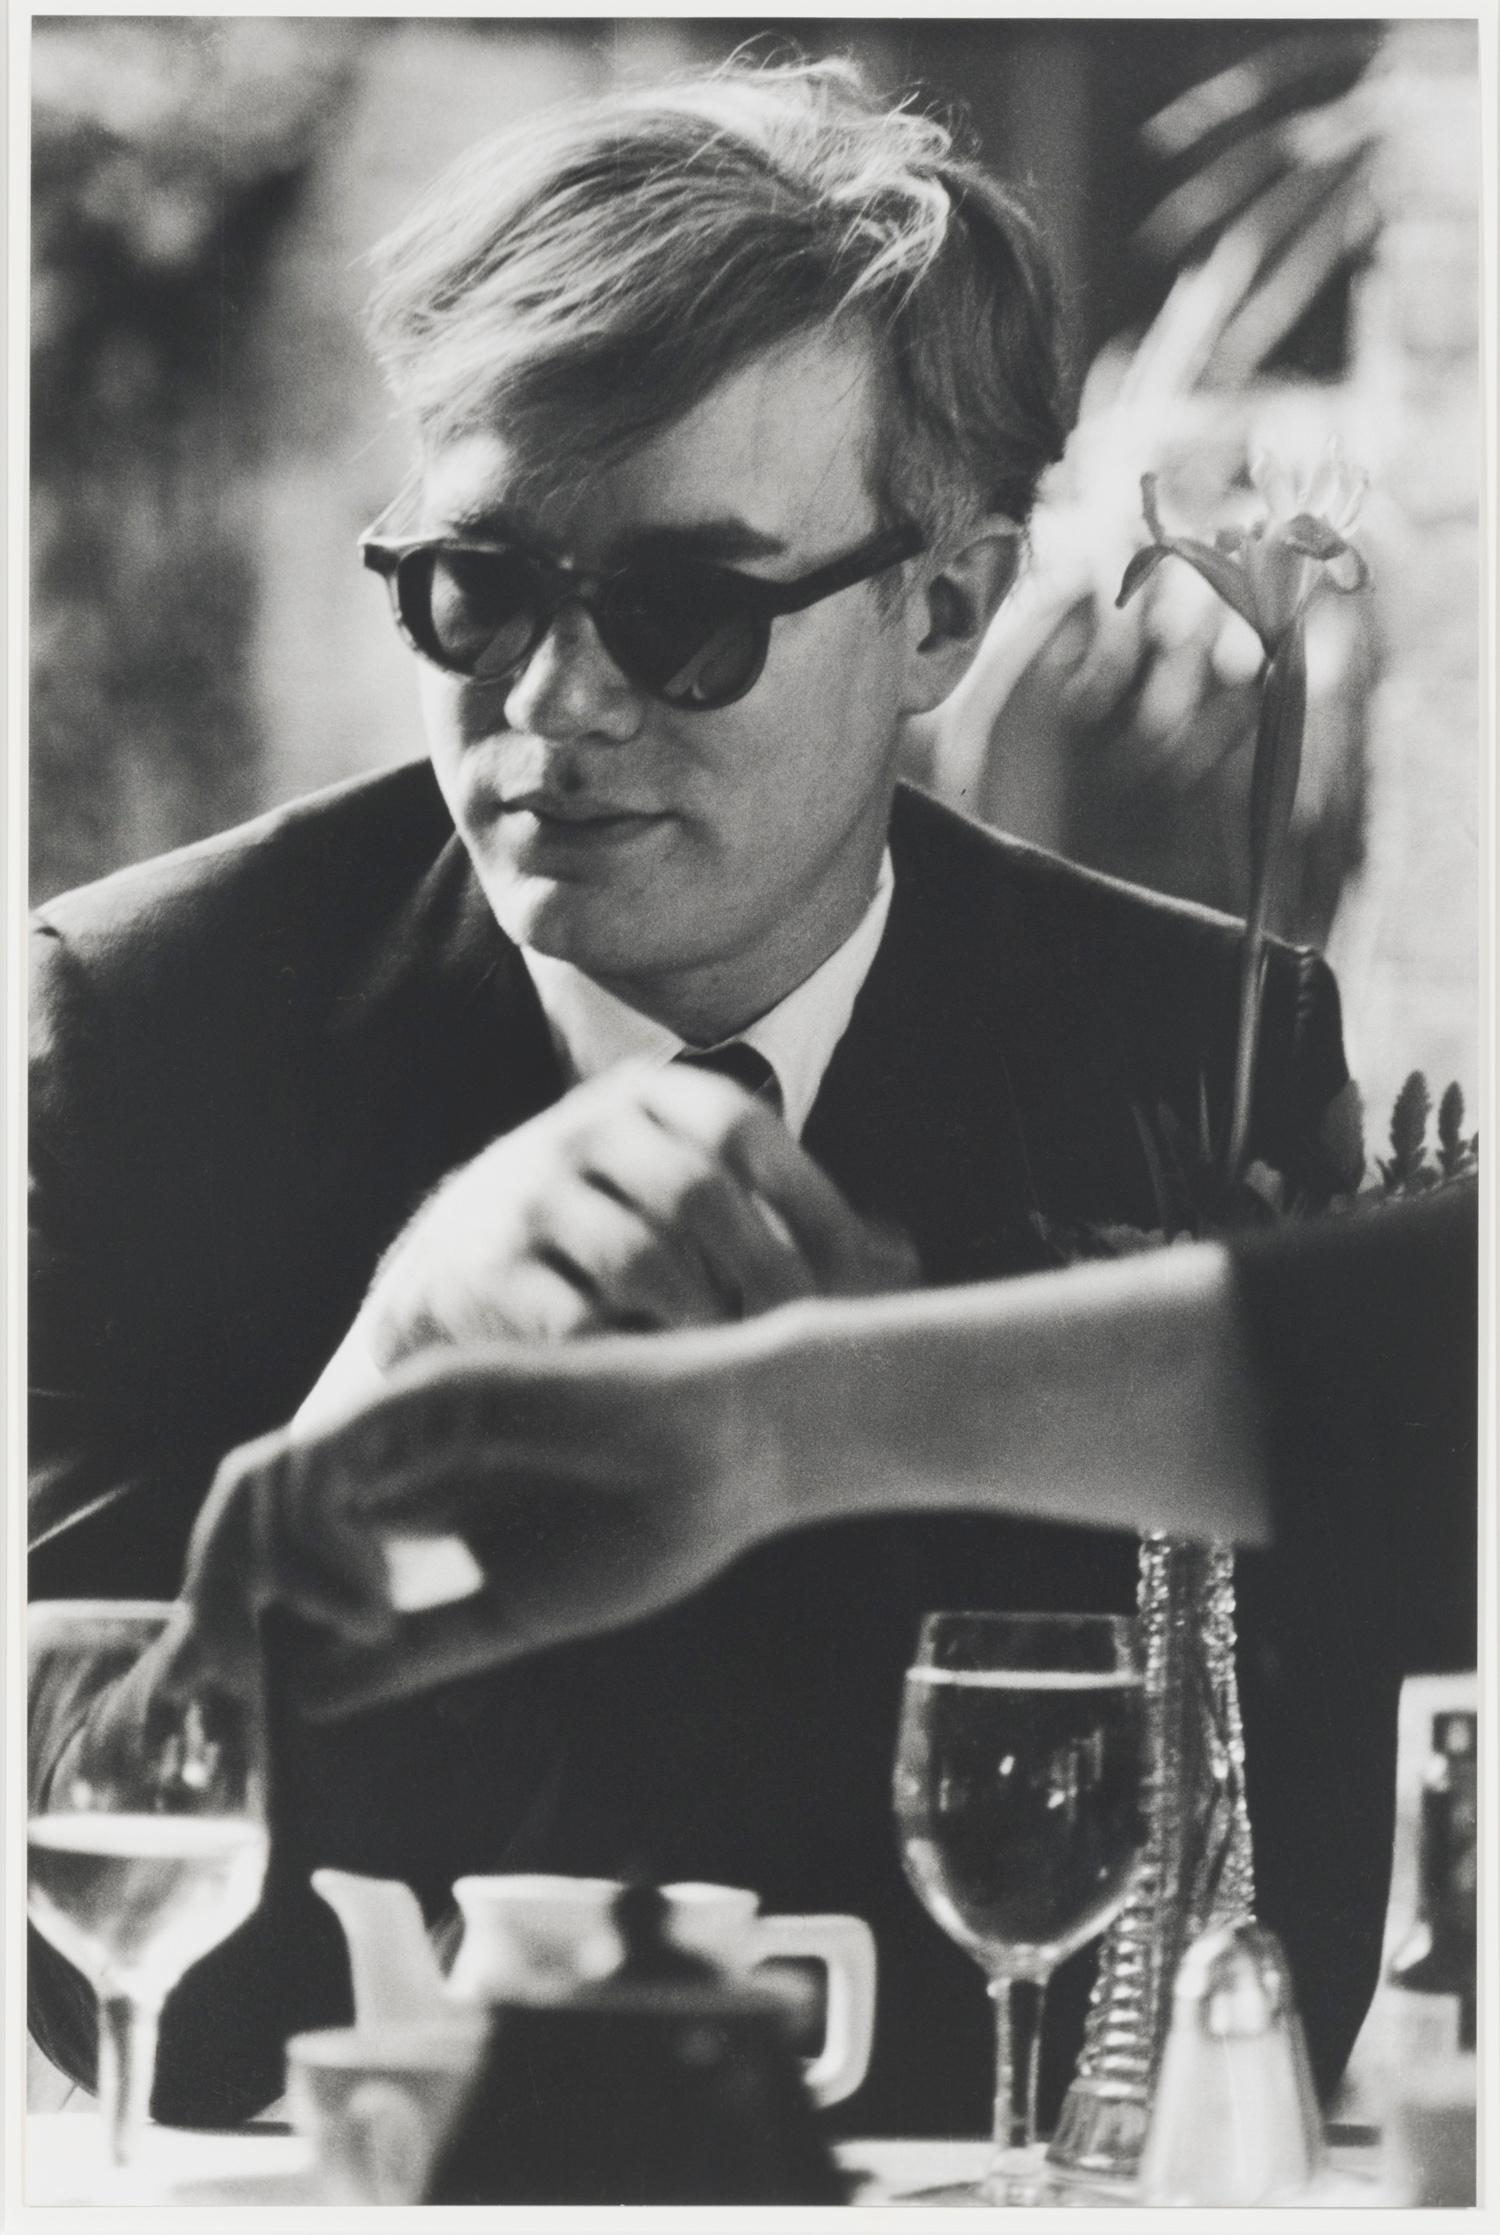 Dennis Hopper Portrait Photograph - Andy Warhol (at table)